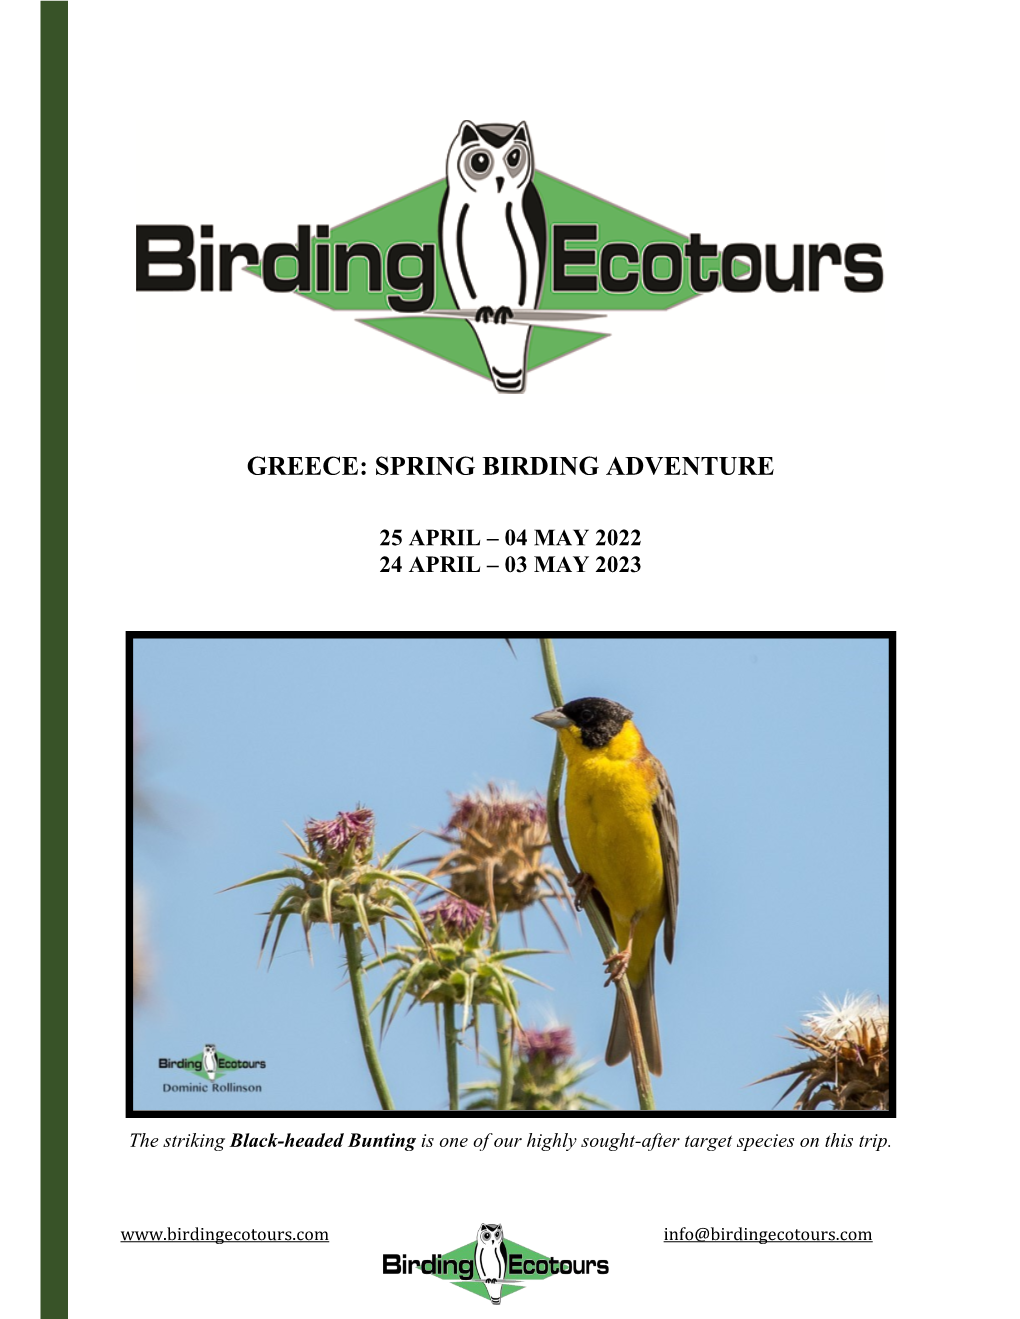 Greece: Spring Birding Adventure